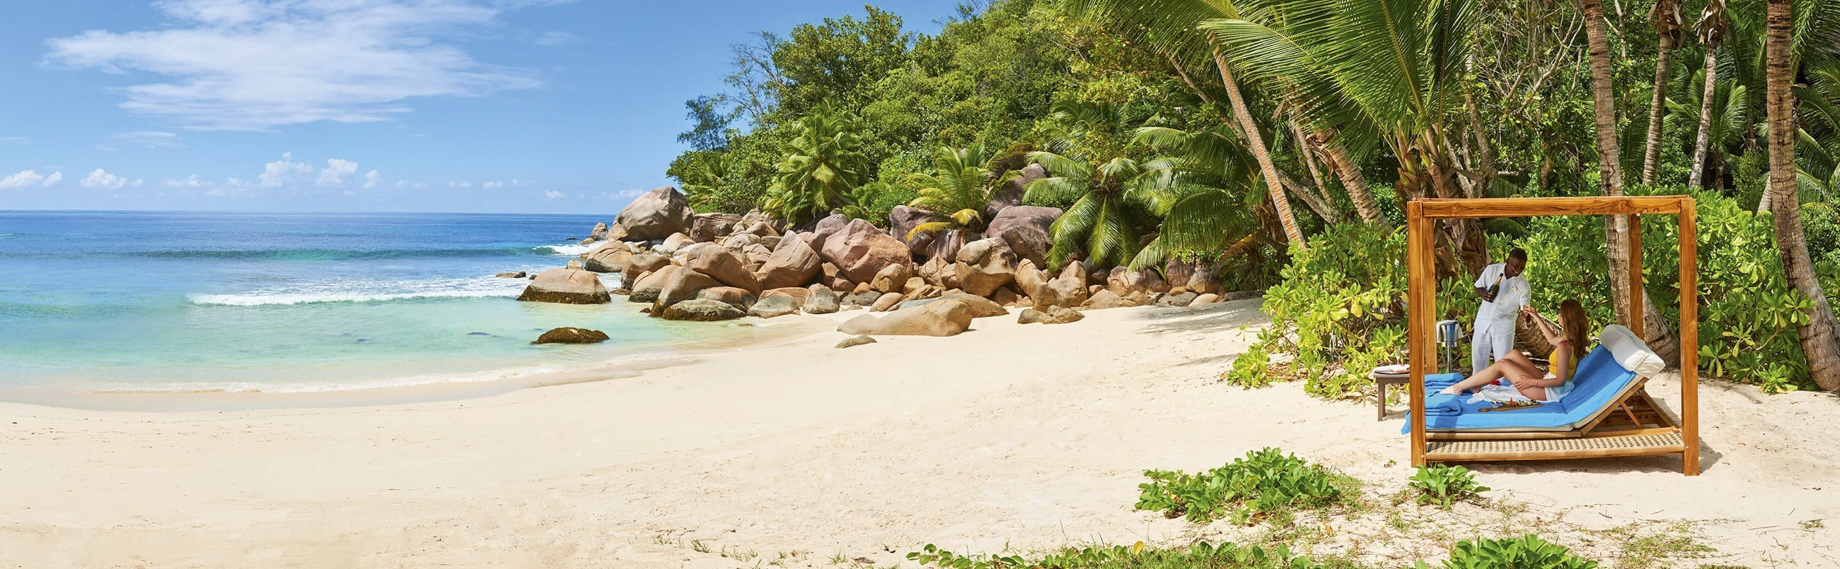 Constance Lemuria Resort – Praslin, Seychelles – Cabana Beach View